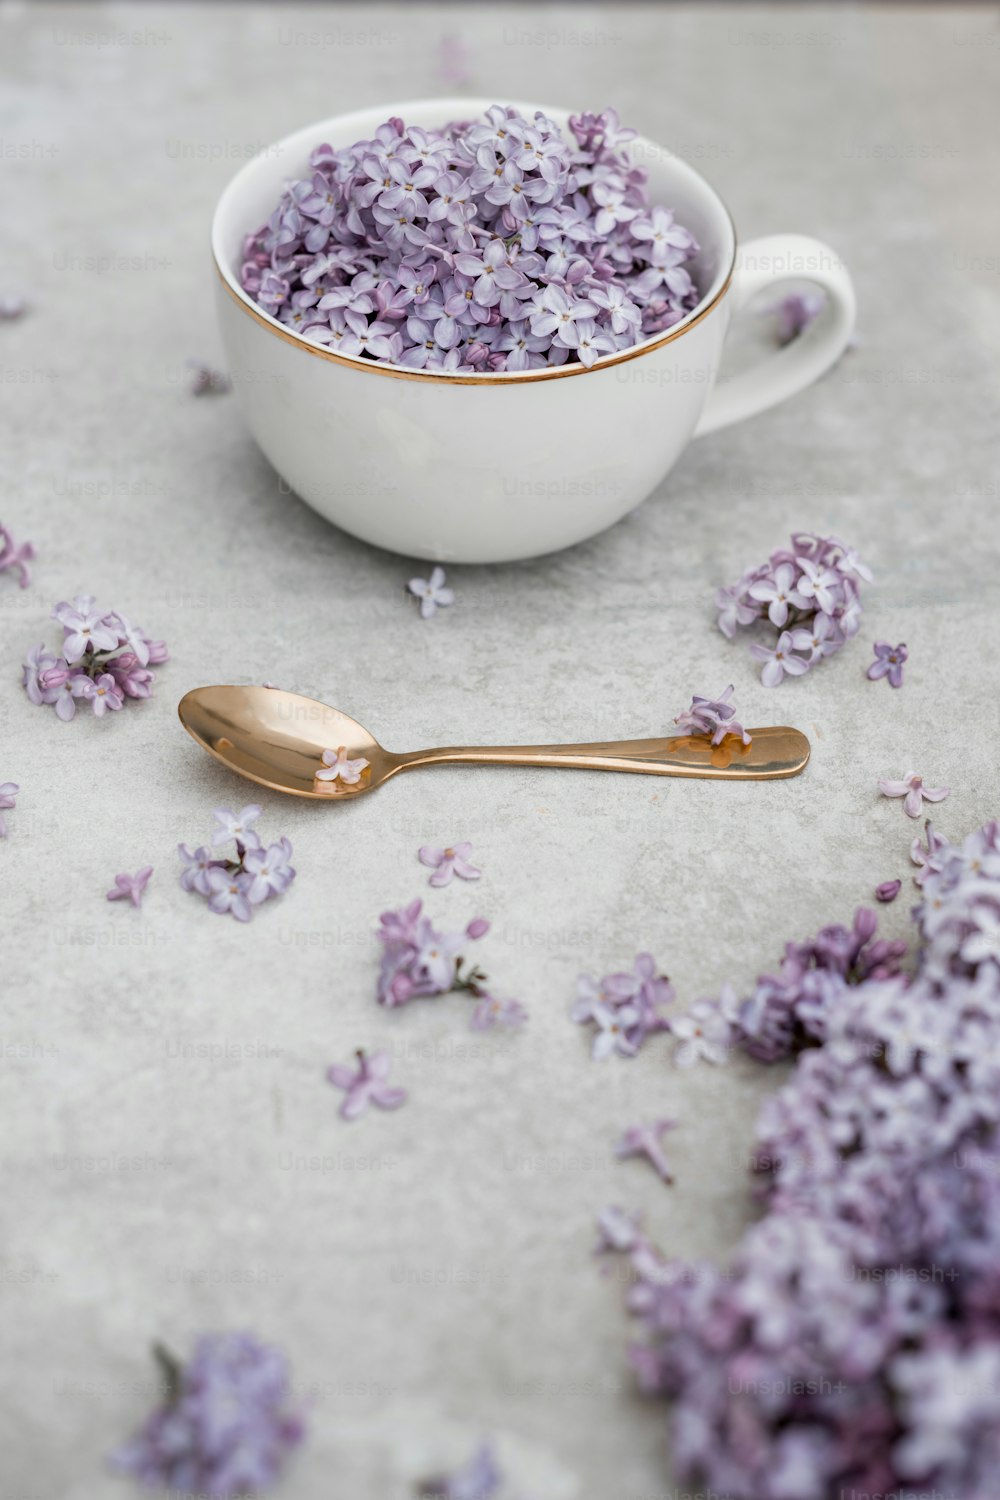 una ciotola bianca piena di fiori viola accanto a un cucchiaio